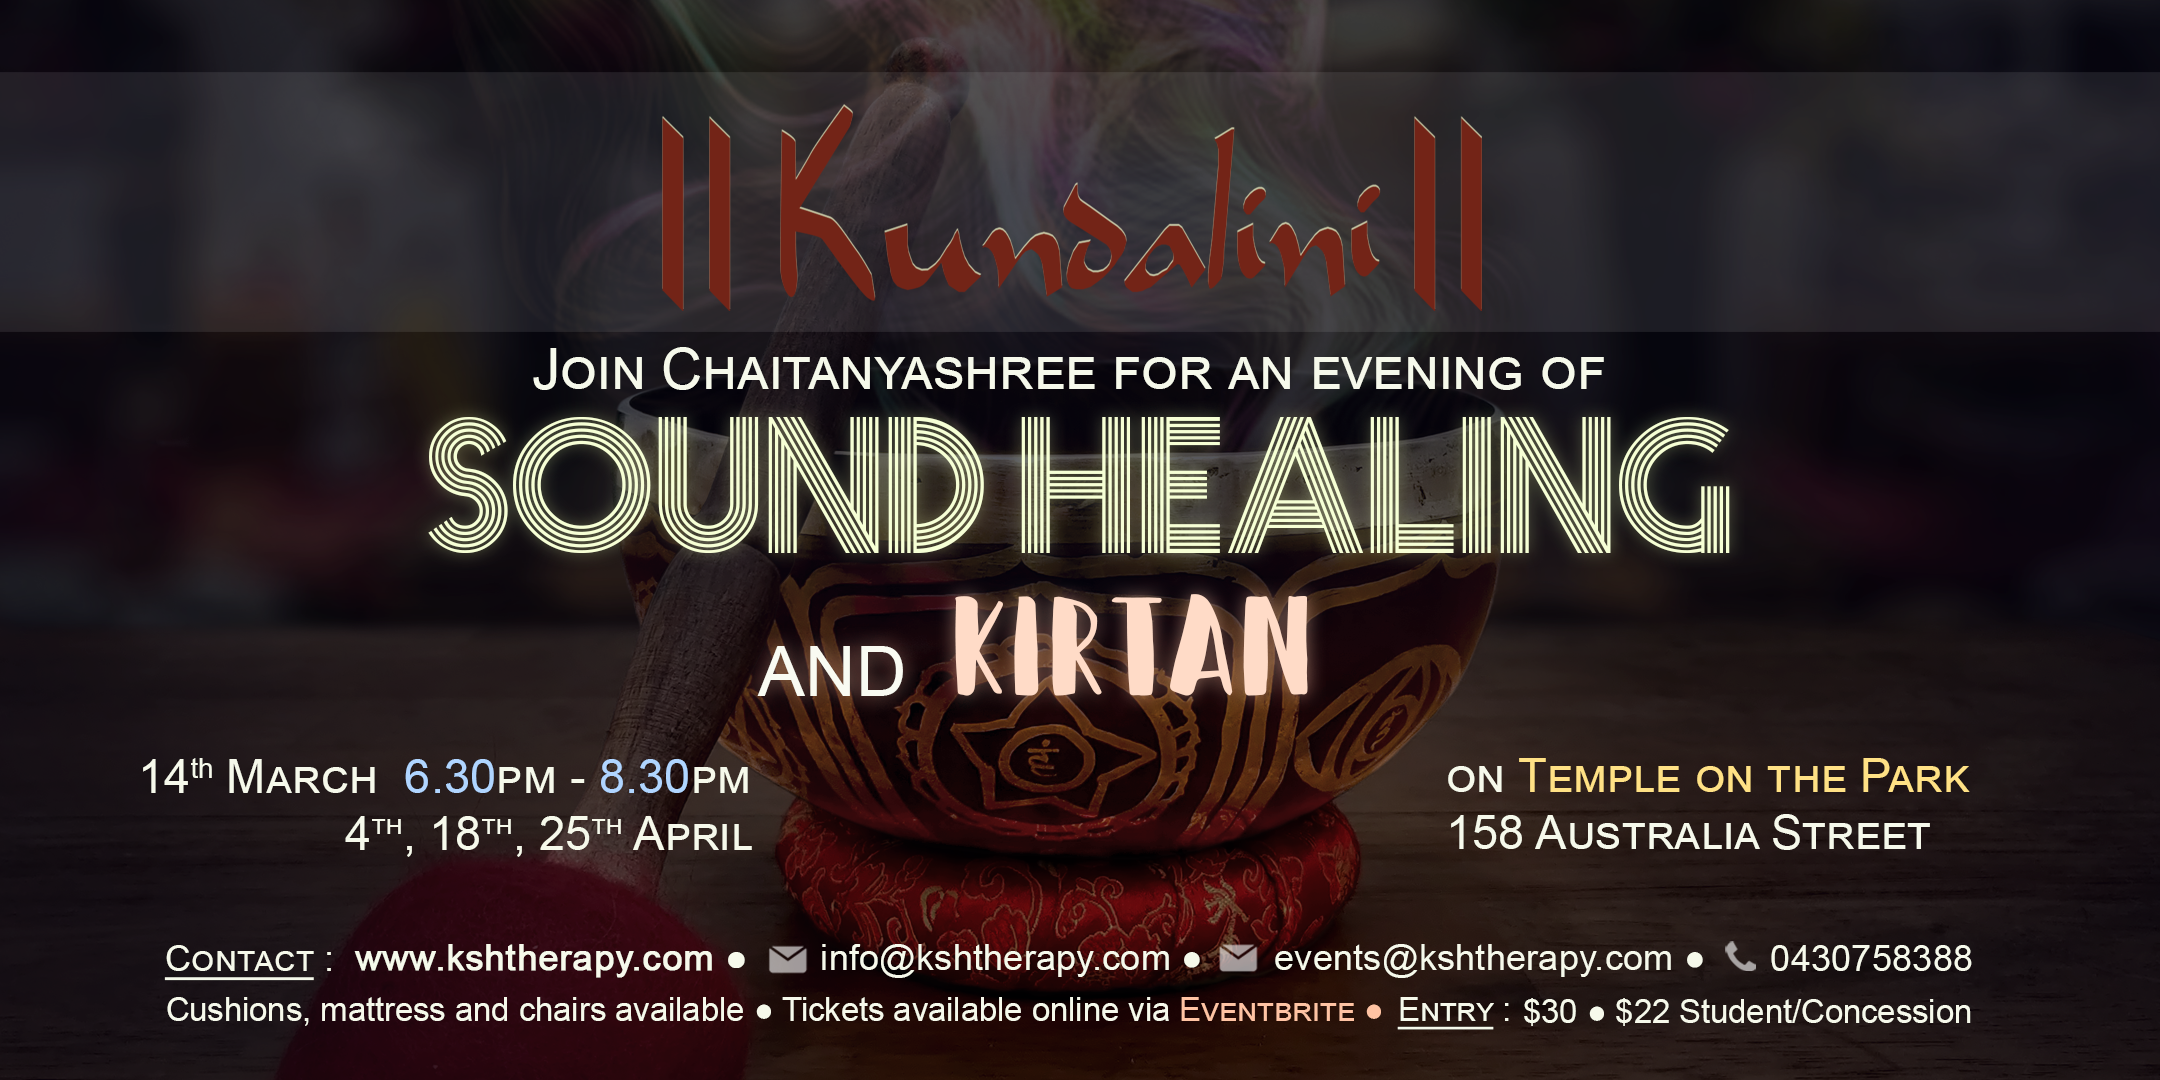 Kundalini Sound Healing & Kirtan At Temple On The Park, With Chaitanyashree